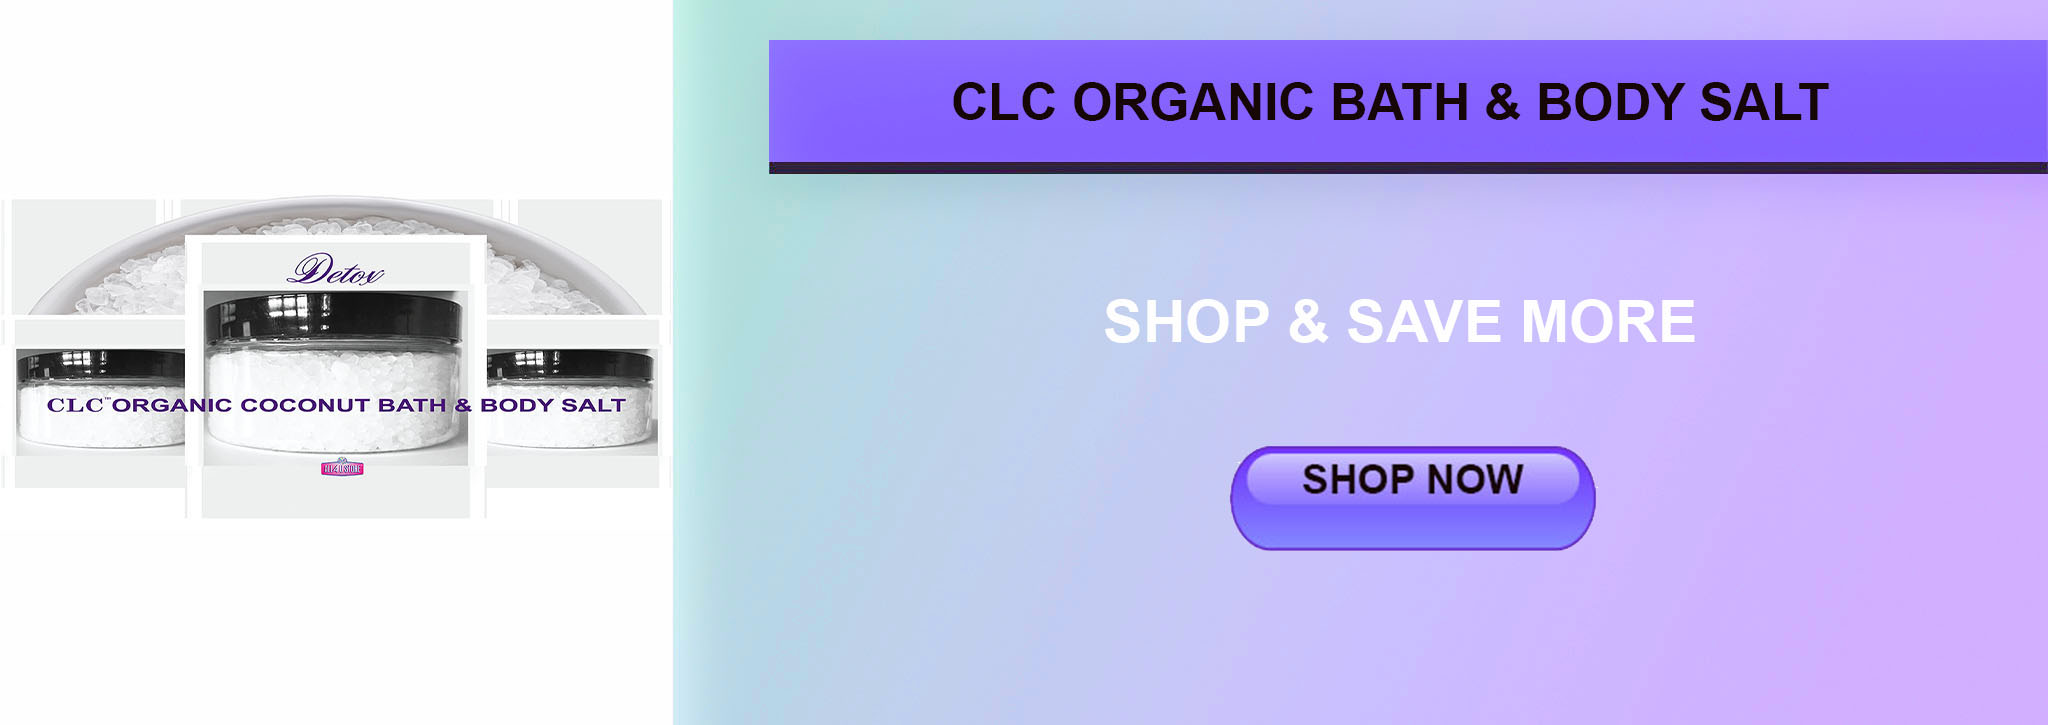 clc_organic_bath__body_salt-all1e.jpg